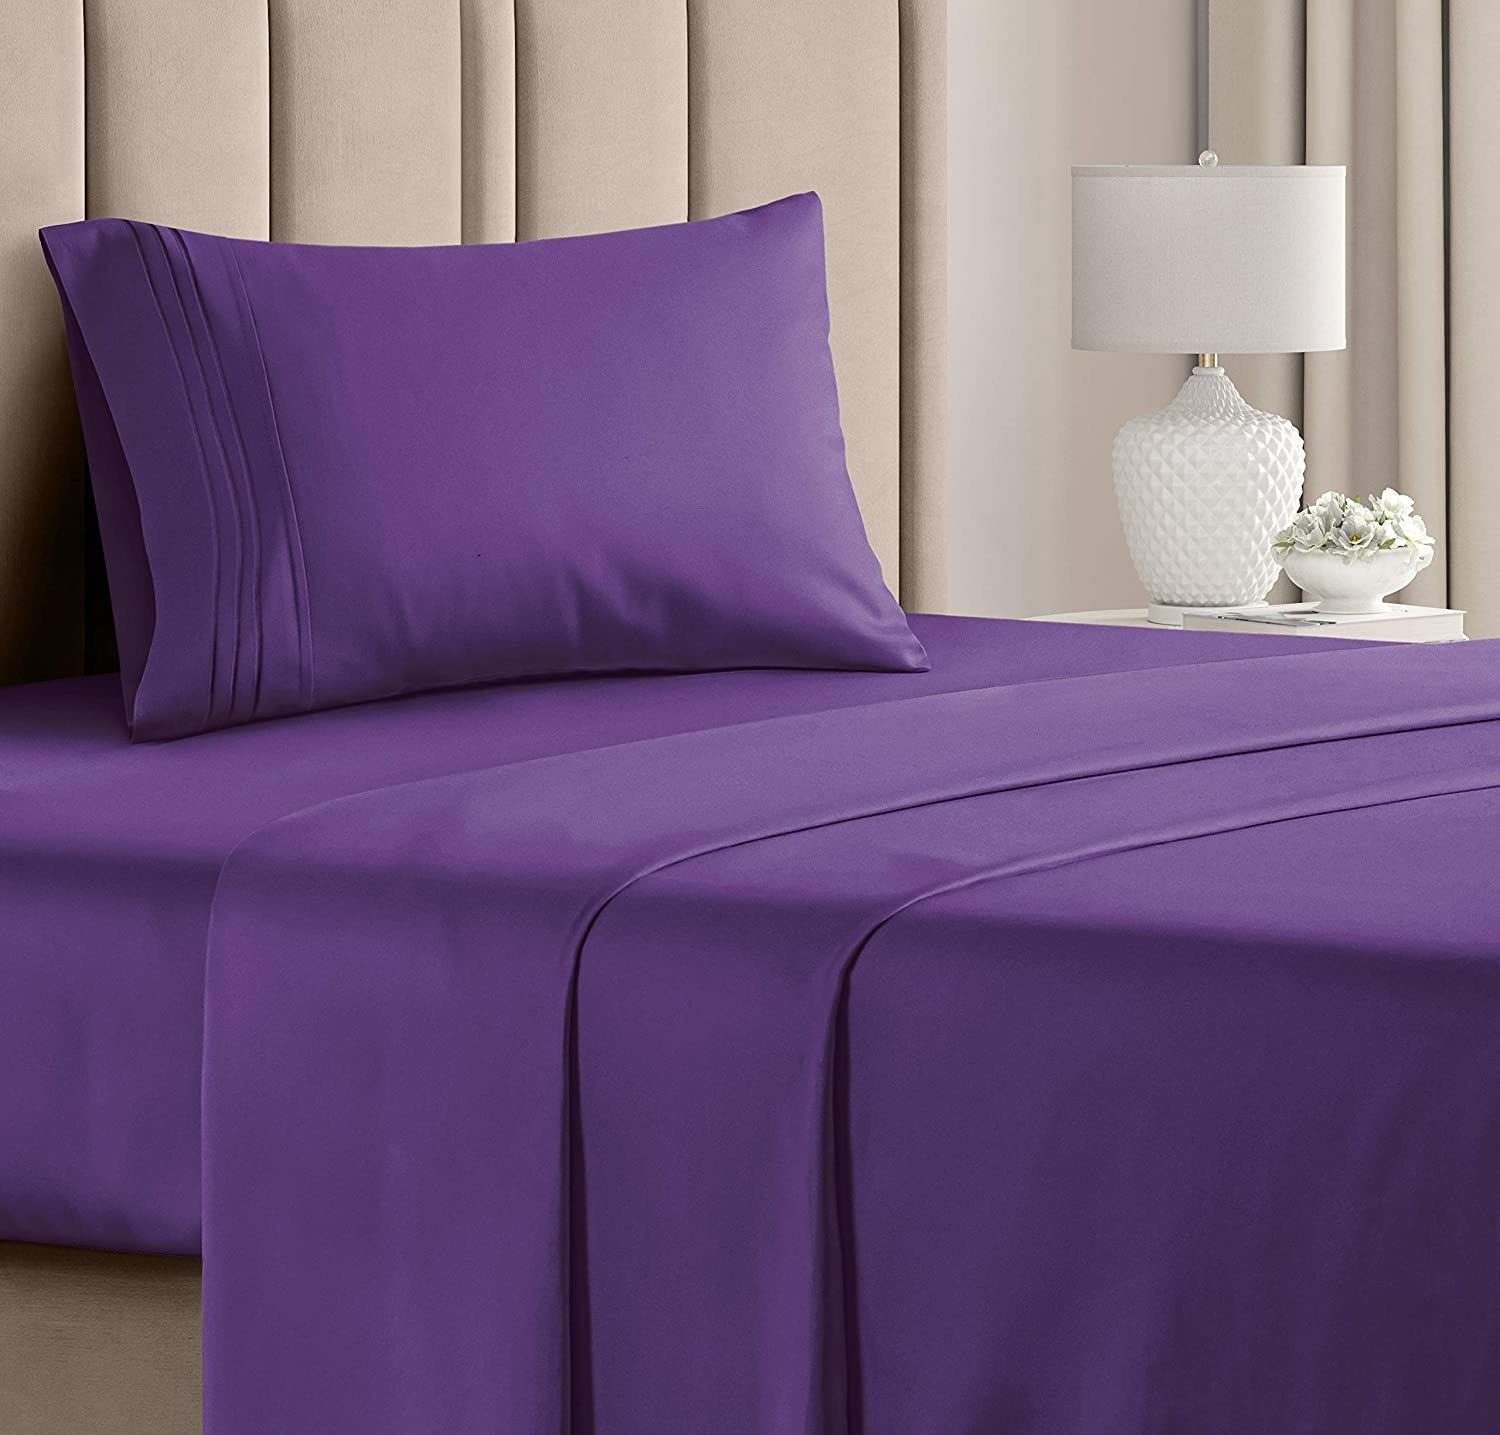 purple sheets and a pillowcase